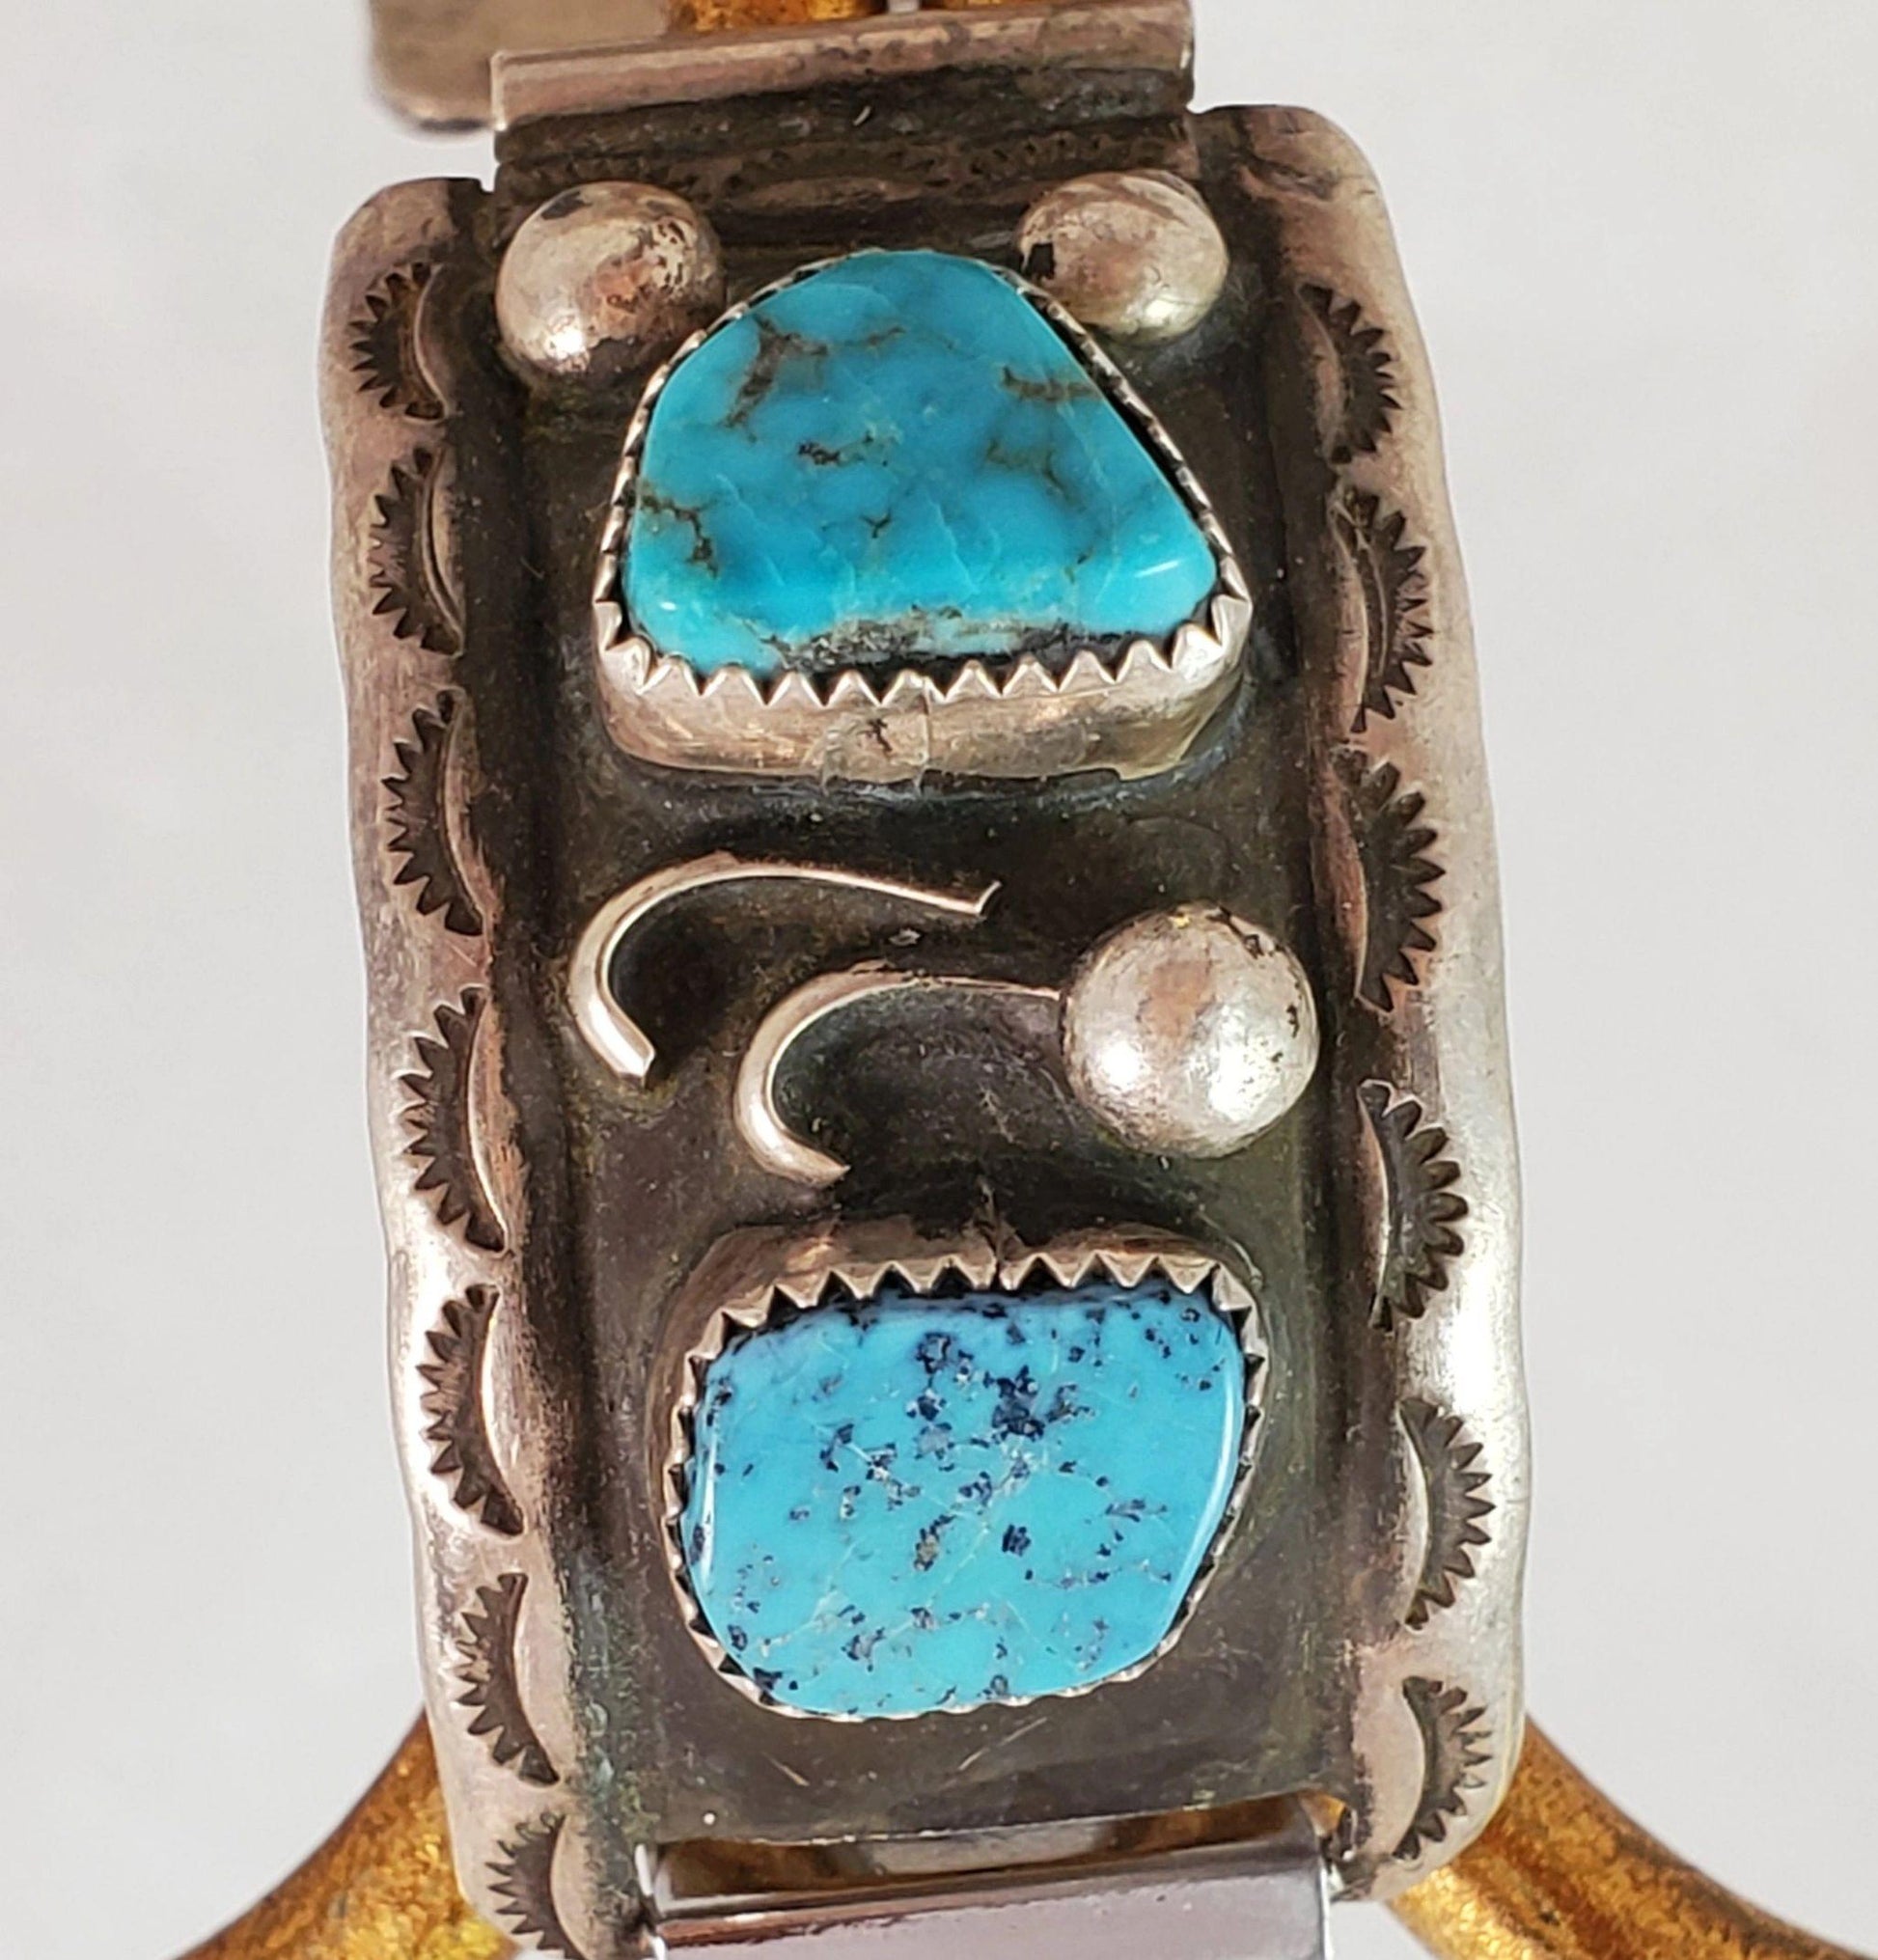 Vintage watch tips Navajo 2 stone - Albuquerque Pawn Shop